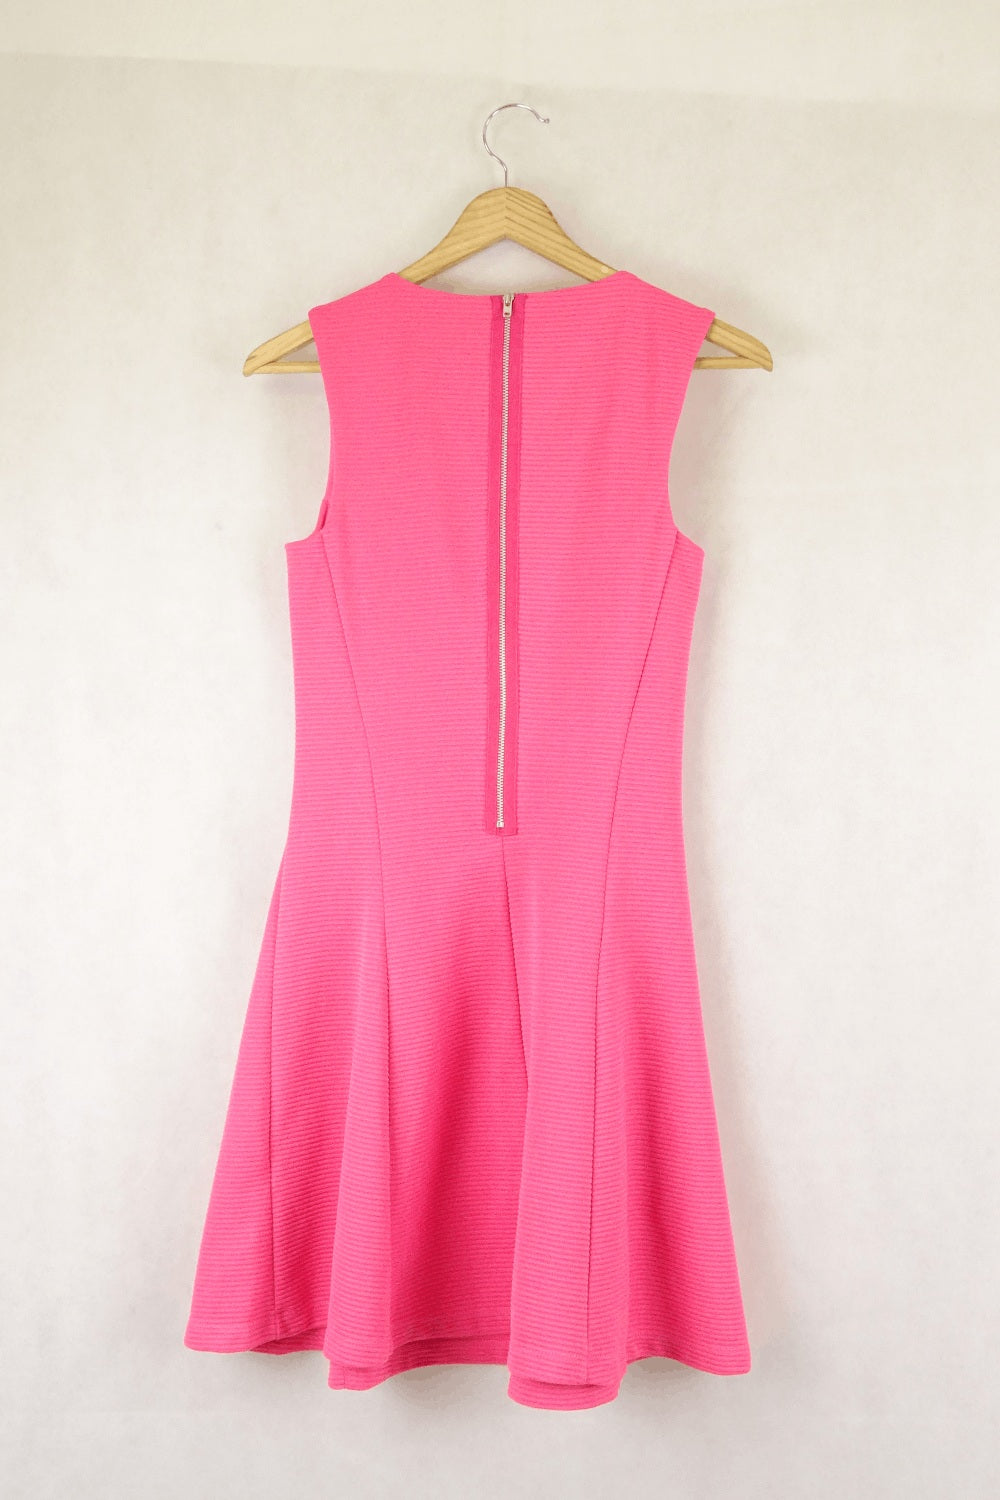 Asos Pink Dress 8